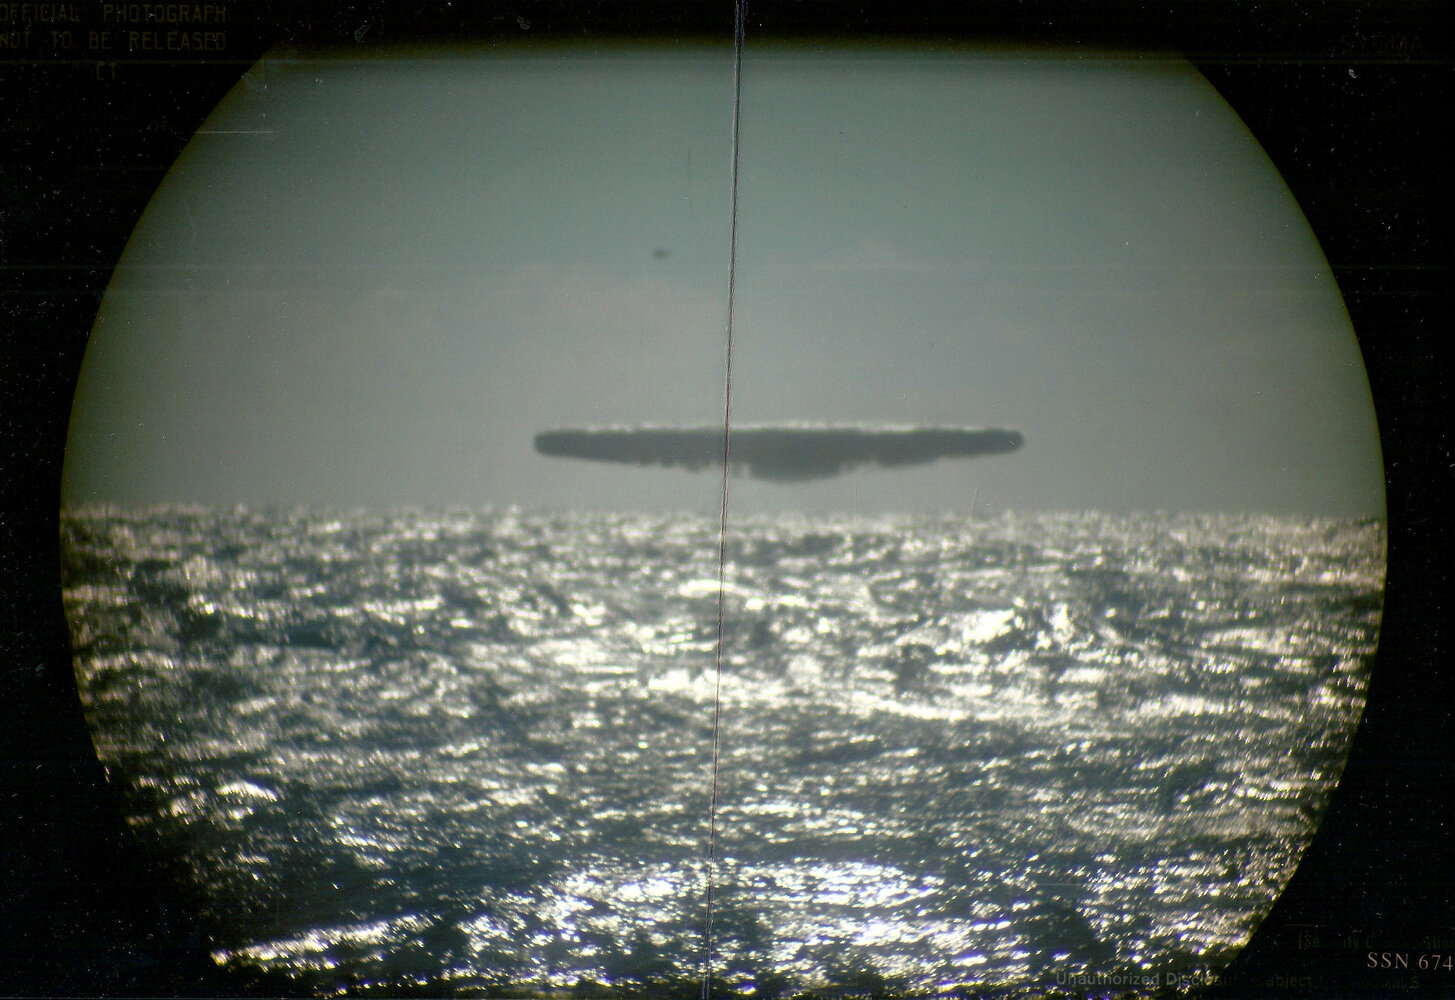 Original-scan-photos-of-submarine-USS-trepang-4-1.jpg